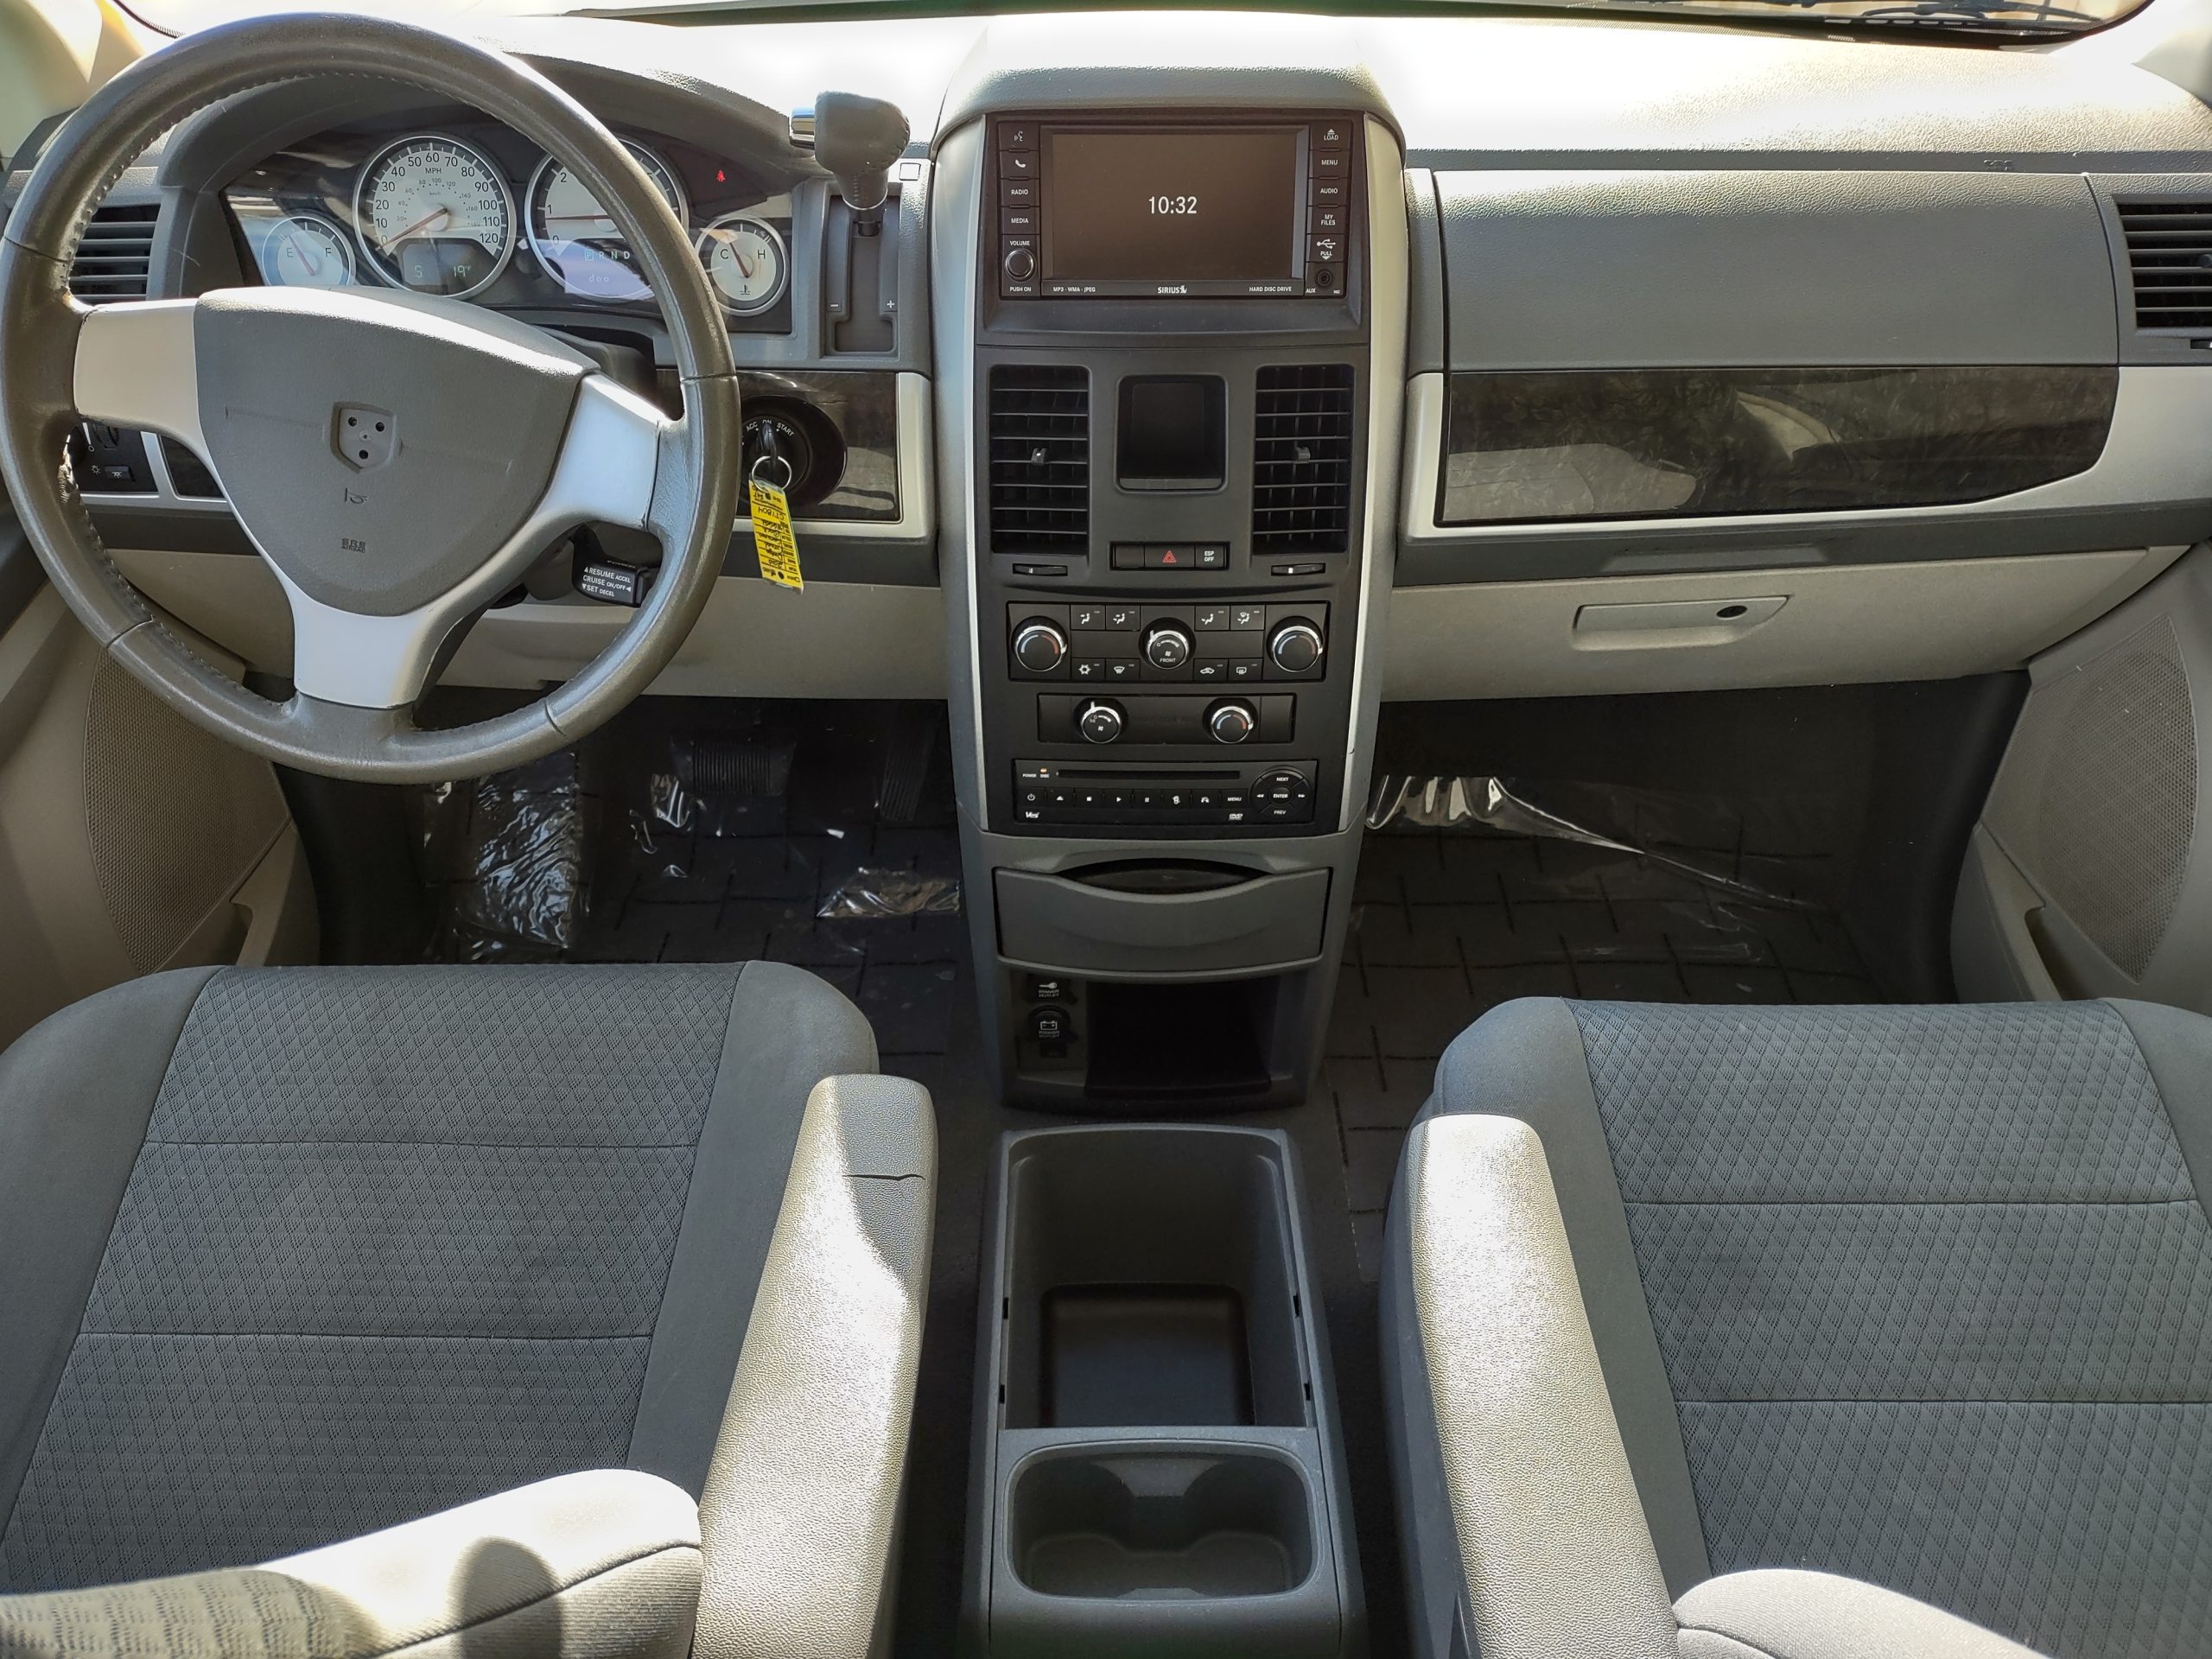 Used 2010 Dodge Grand Caravan SXT Minivan for sale in 